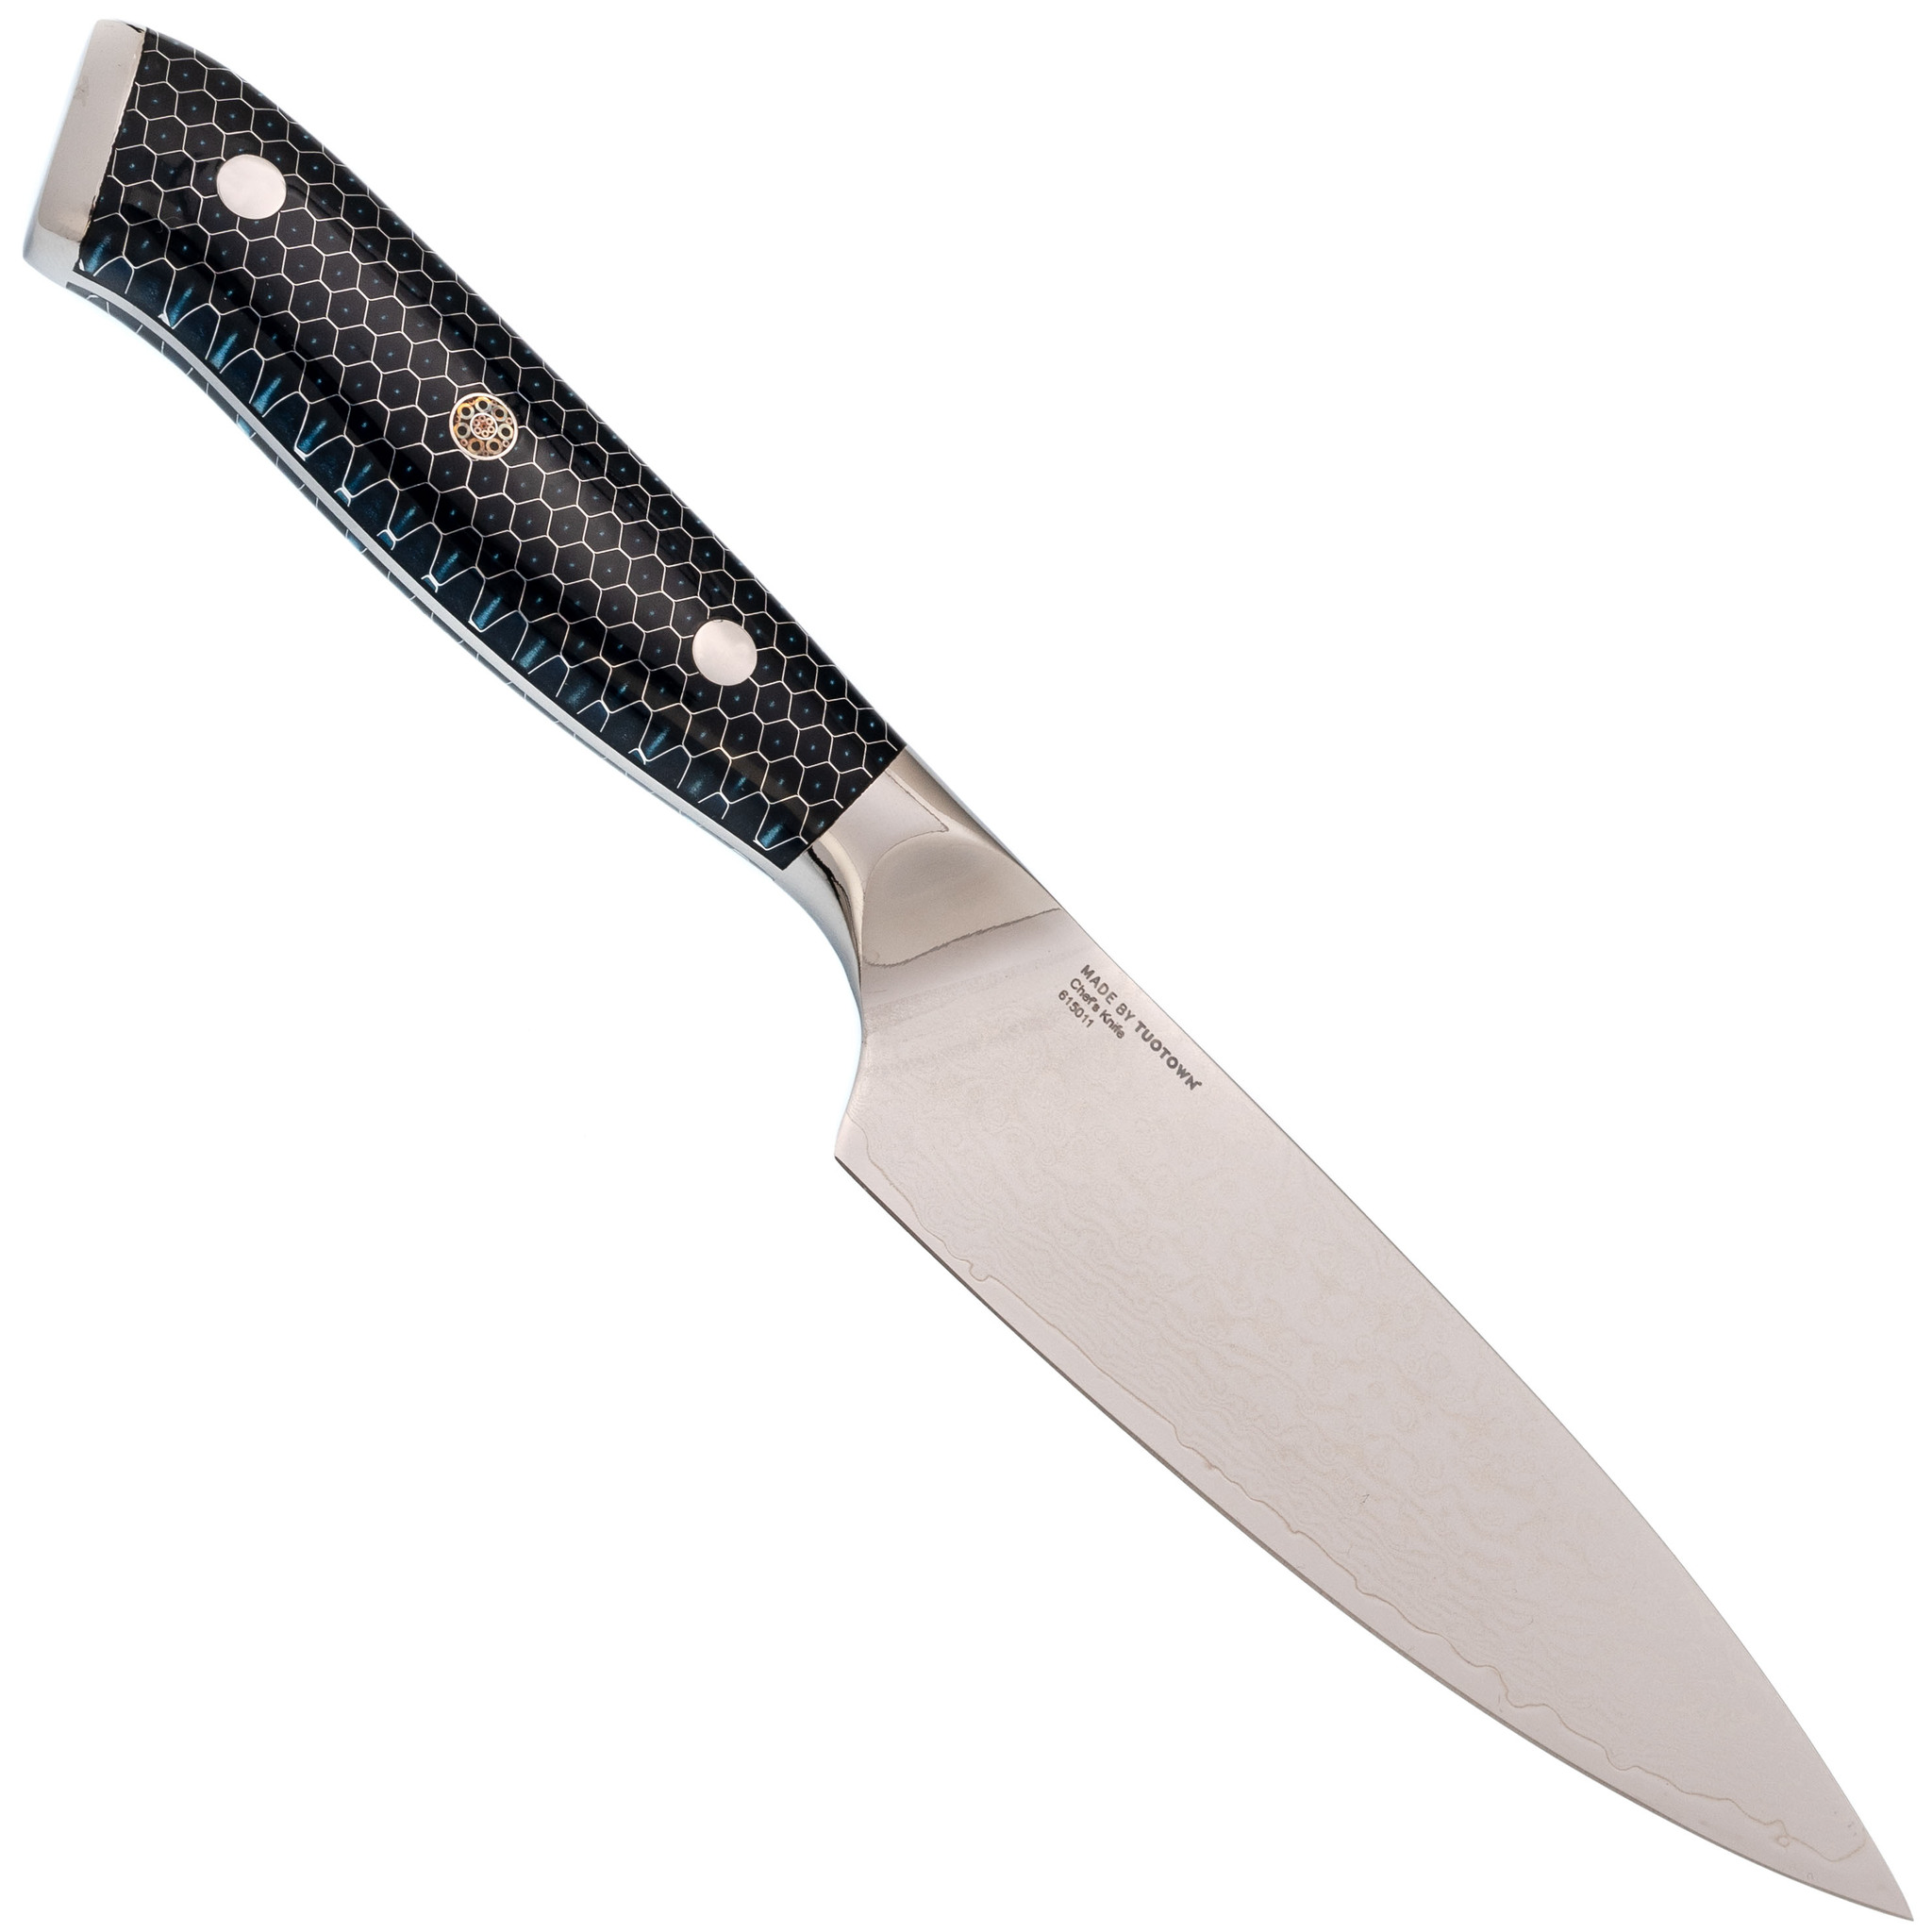 Кухонный нож Tuotown, сталь VG10, обкладка Damascus, рукоять акрил, синий - фото 3